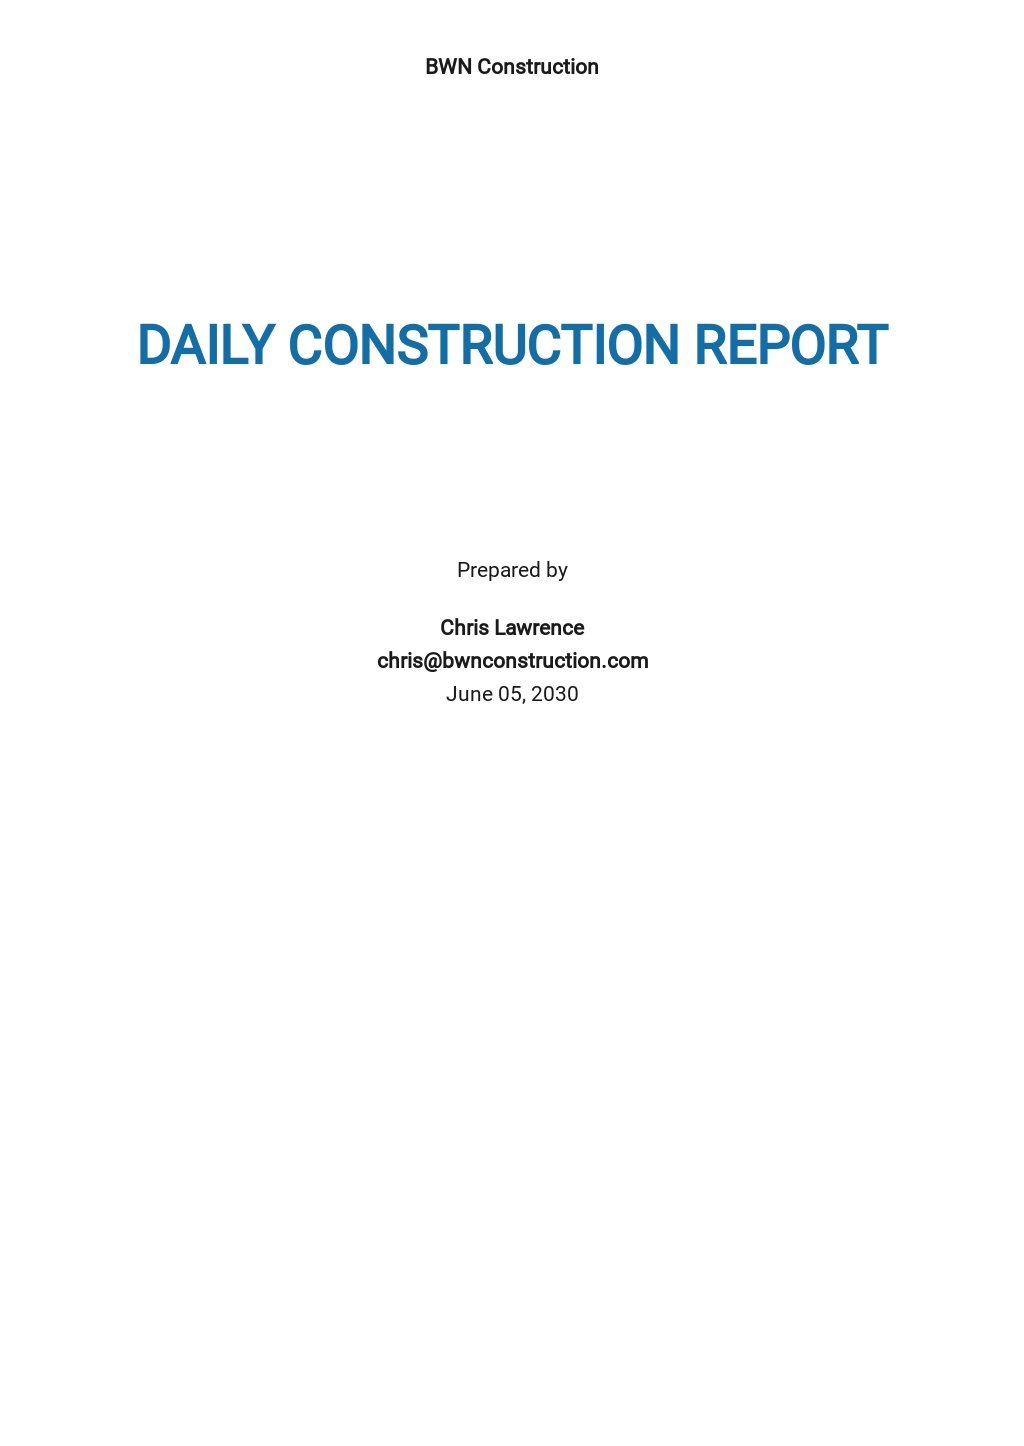 Daily Construction Report Sample Template - Google Docs, Word Regarding Daily Reports Construction Templates